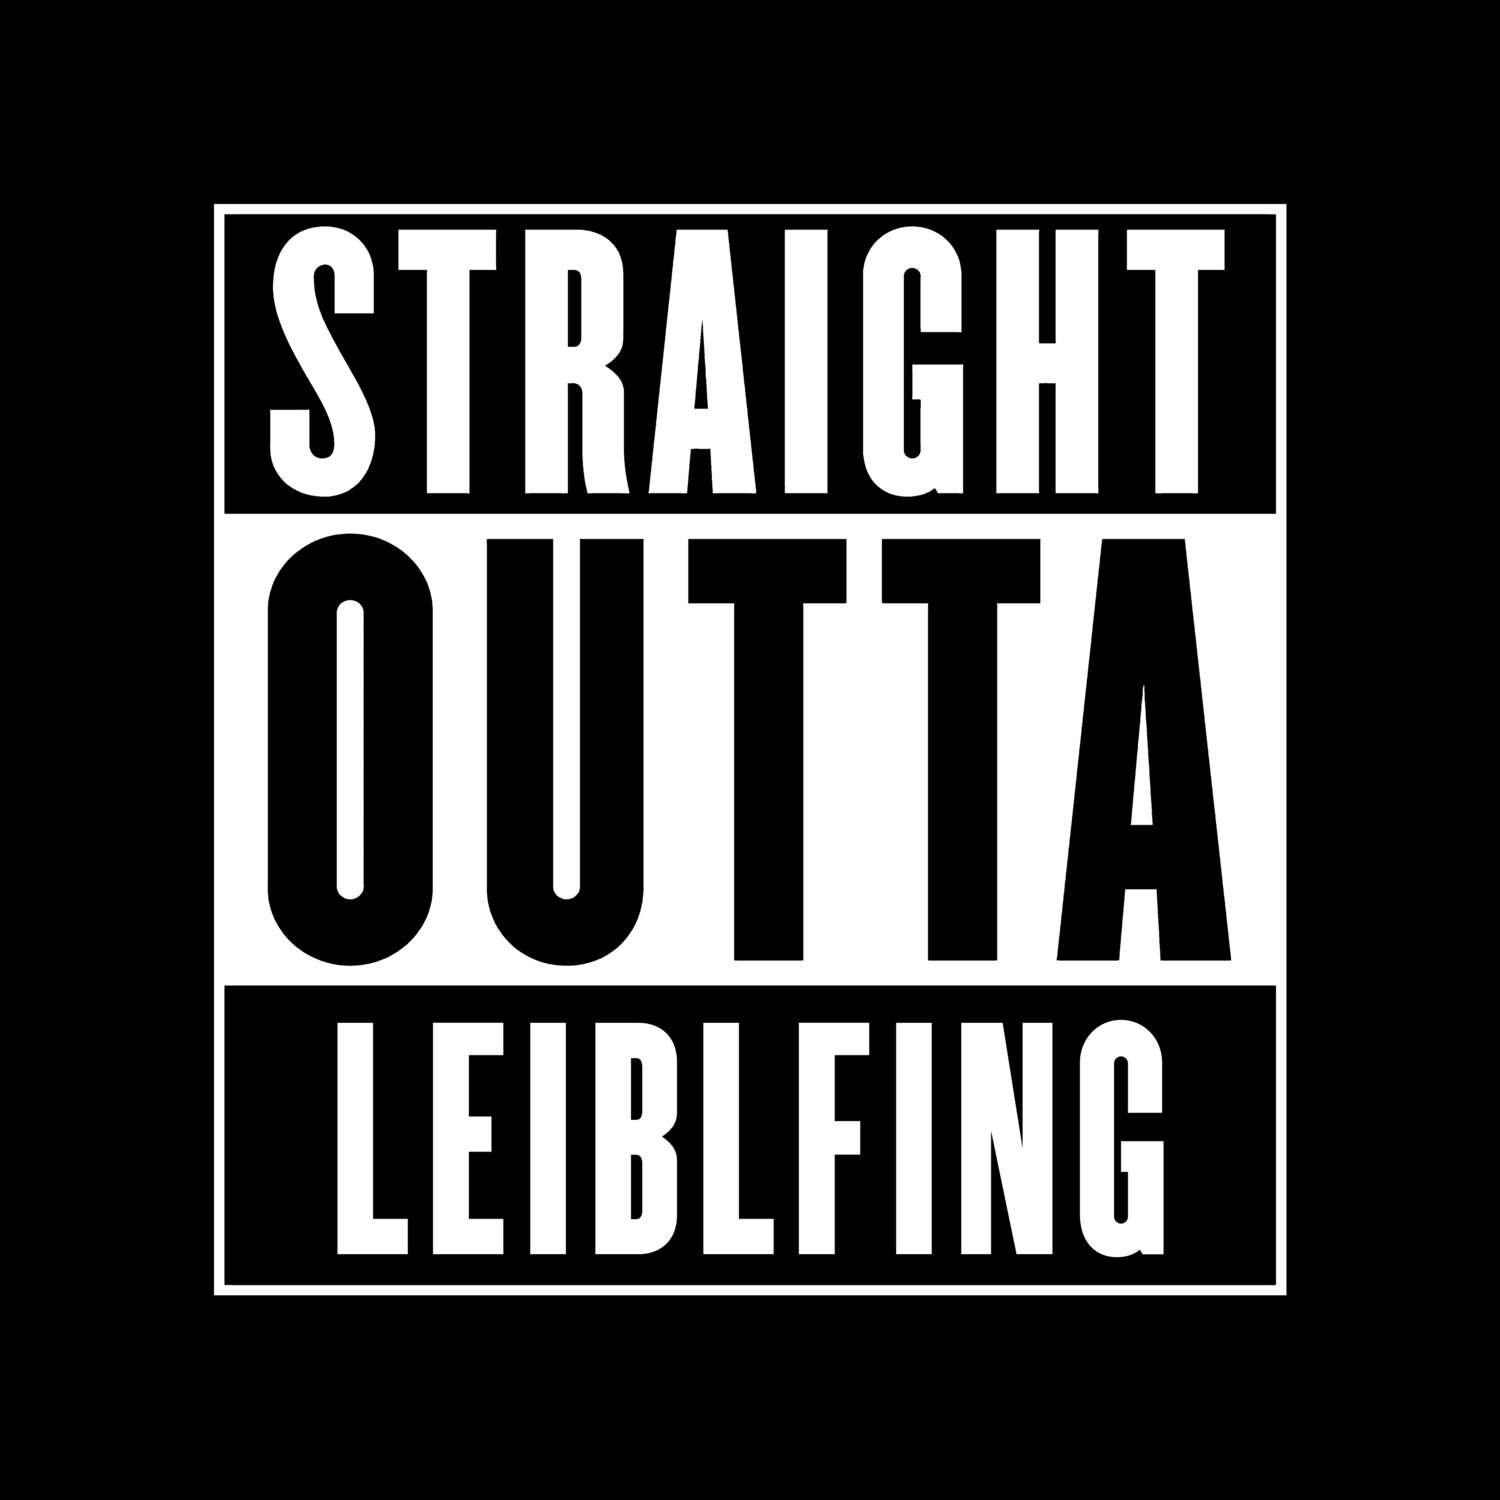 Leiblfing T-Shirt »Straight Outta«